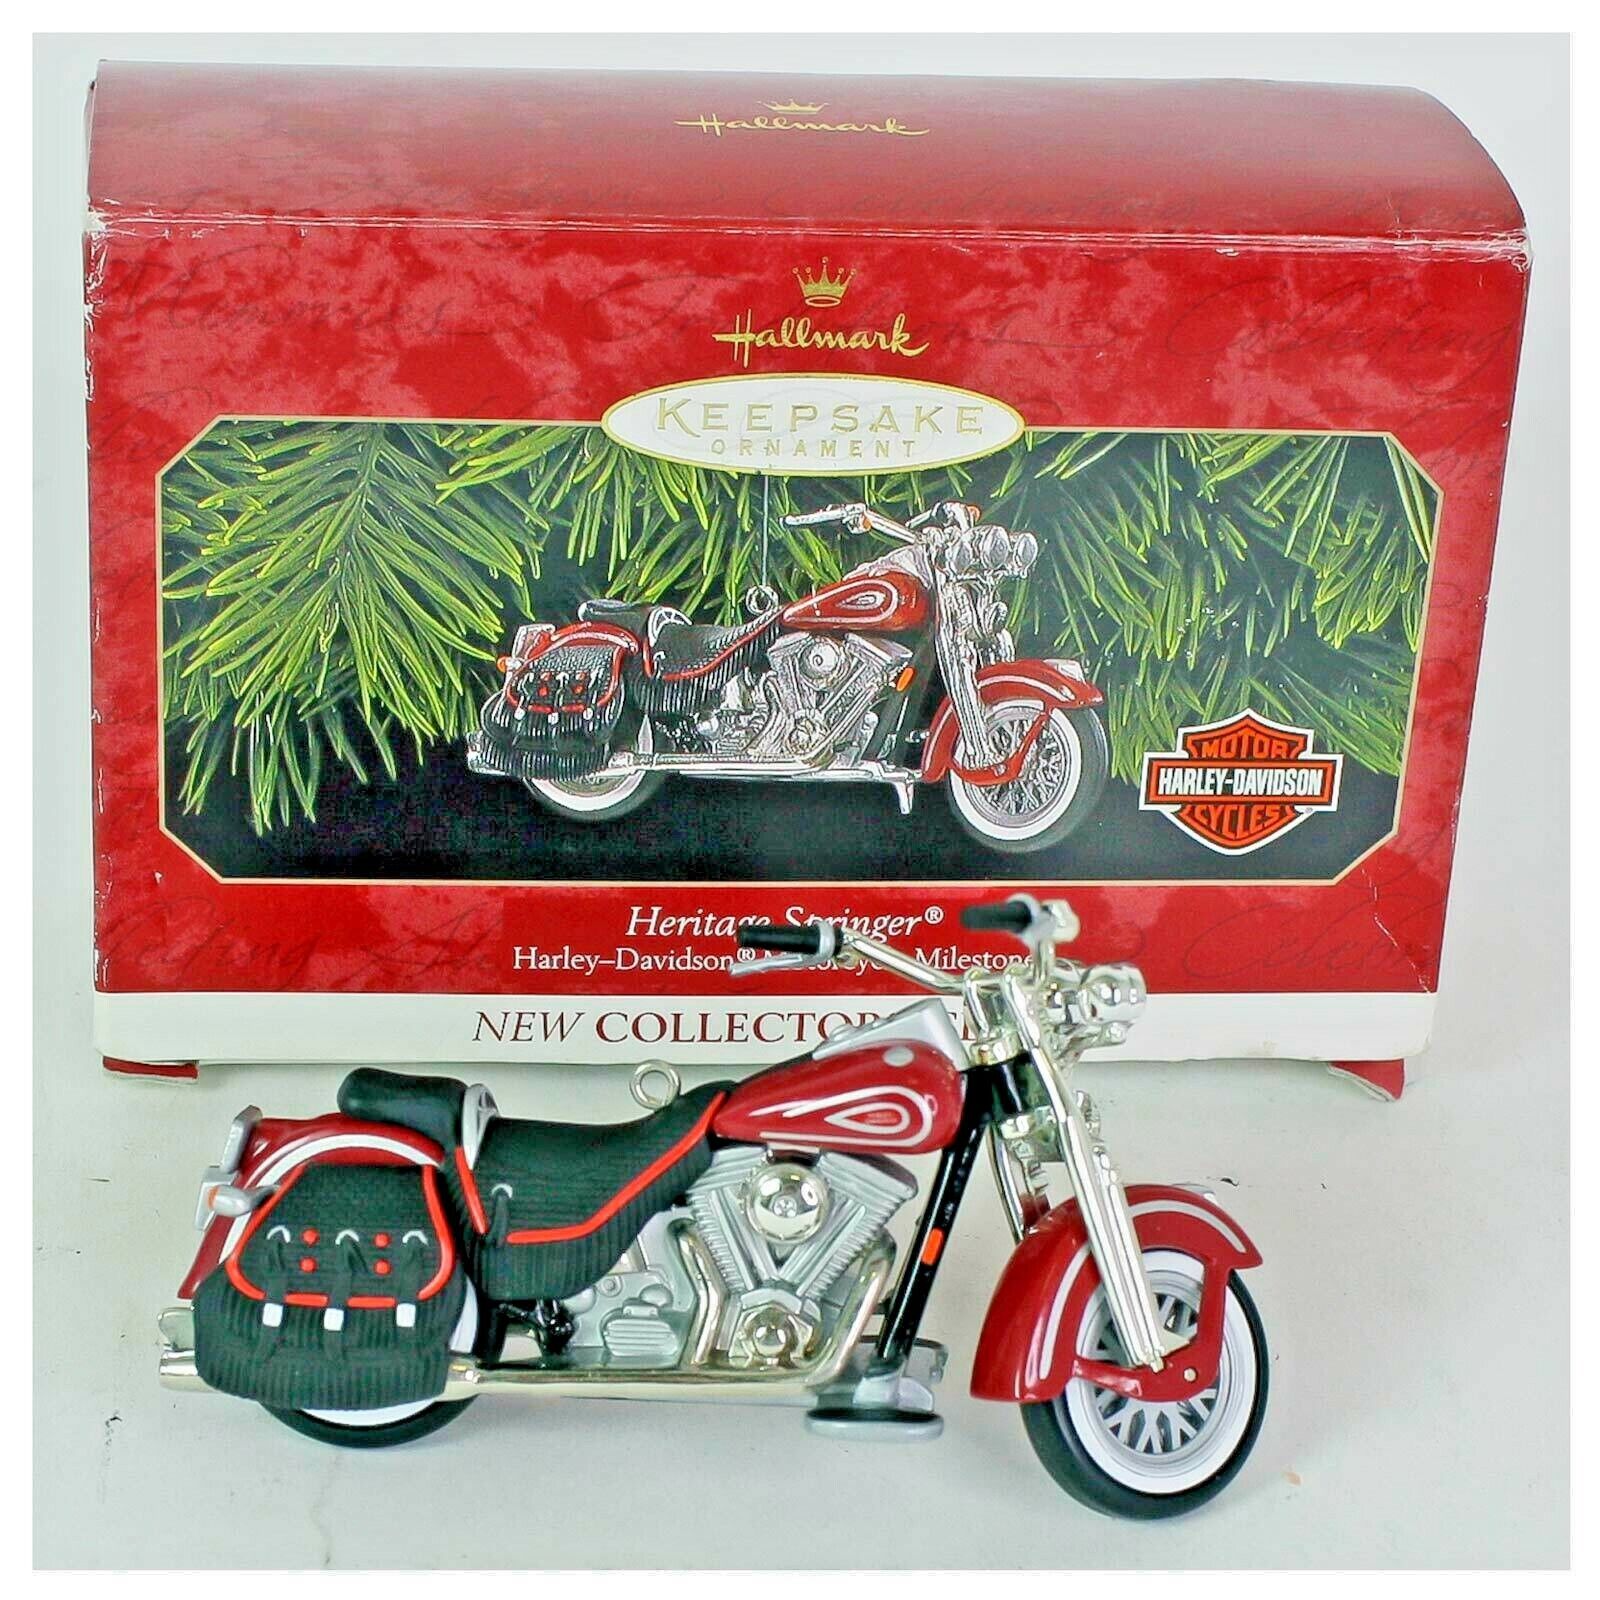 Hallmark 1999 Heritage Springer Harley Davidson Motorcycle Christmas Ornament